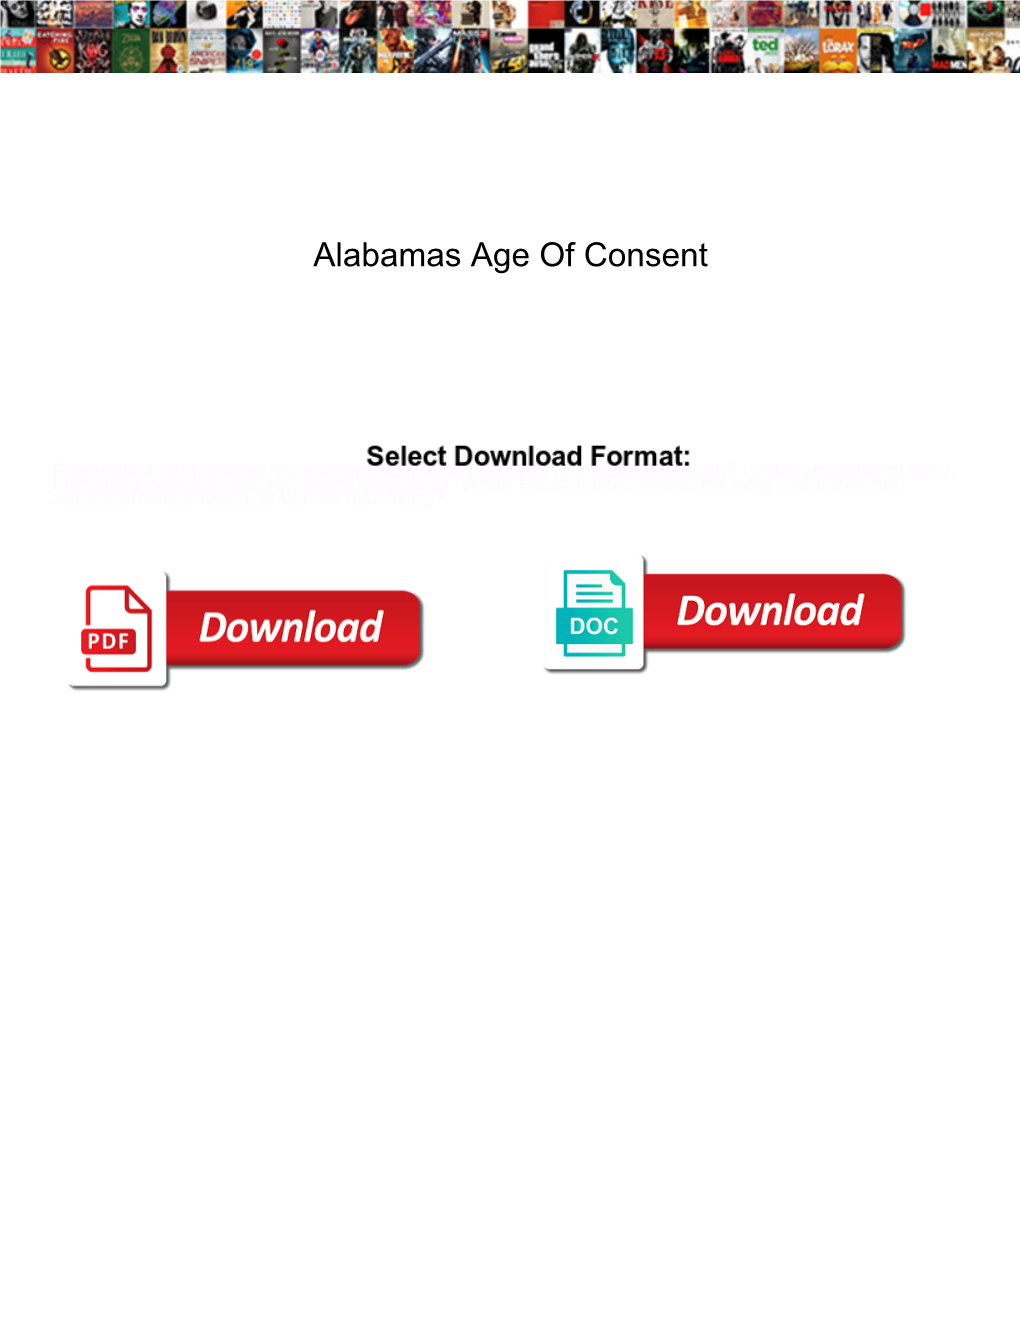 Alabamas Age of Consent